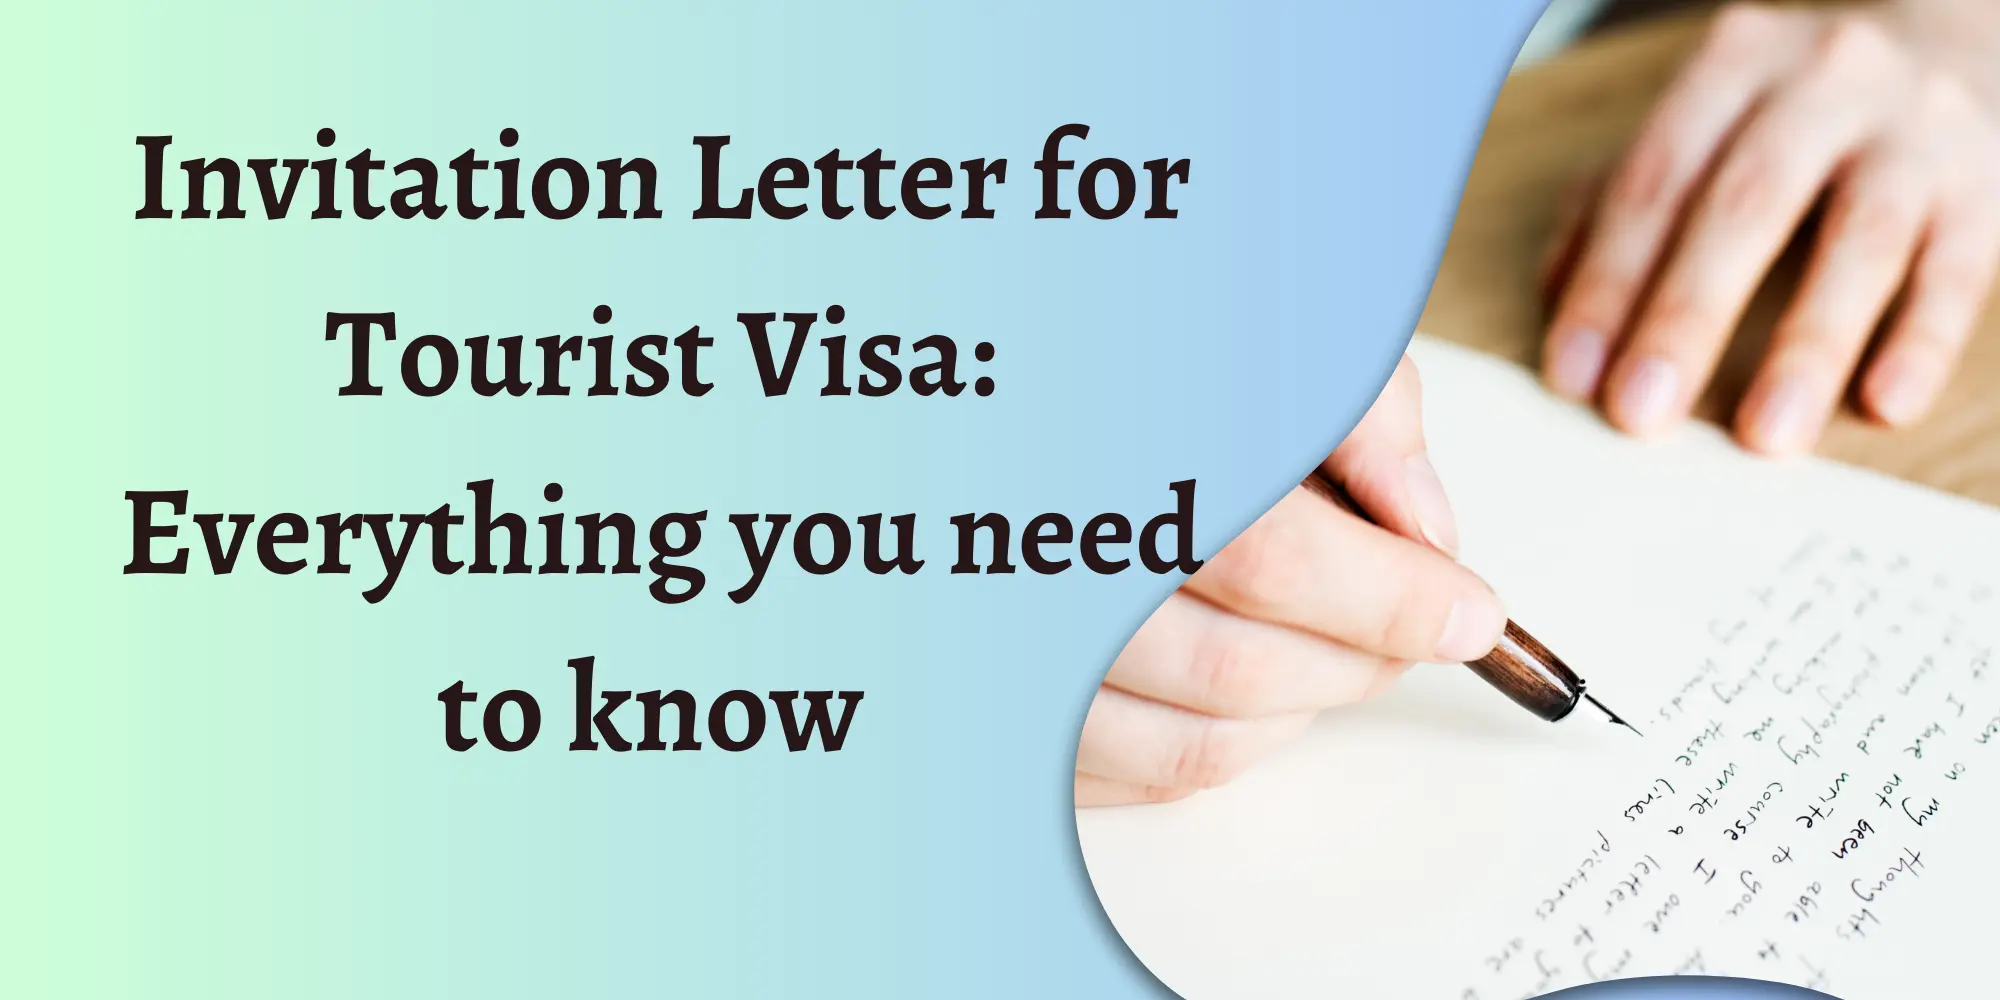 invitation letter for tourist visa Australia featured image post